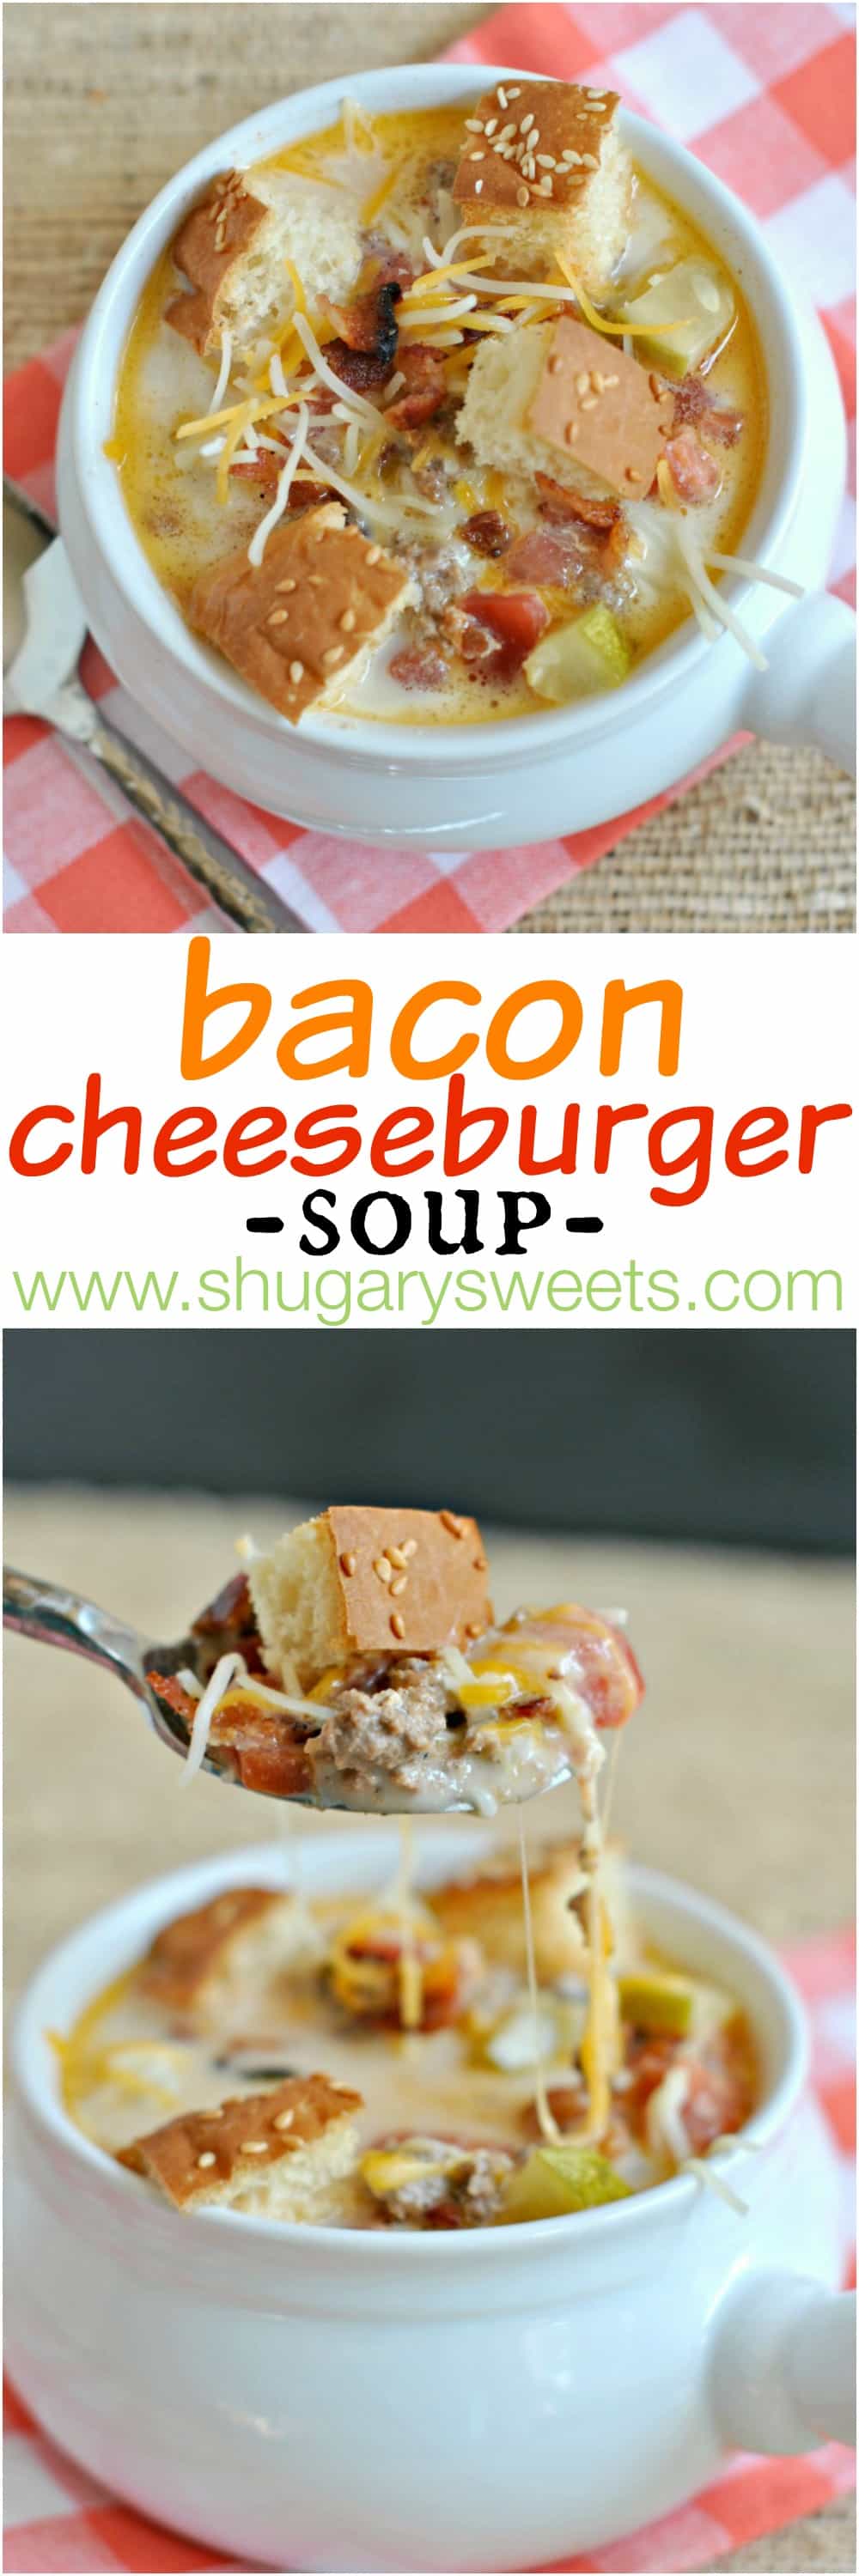 Bacon Cheeseburger Soup - Shugary Sweets